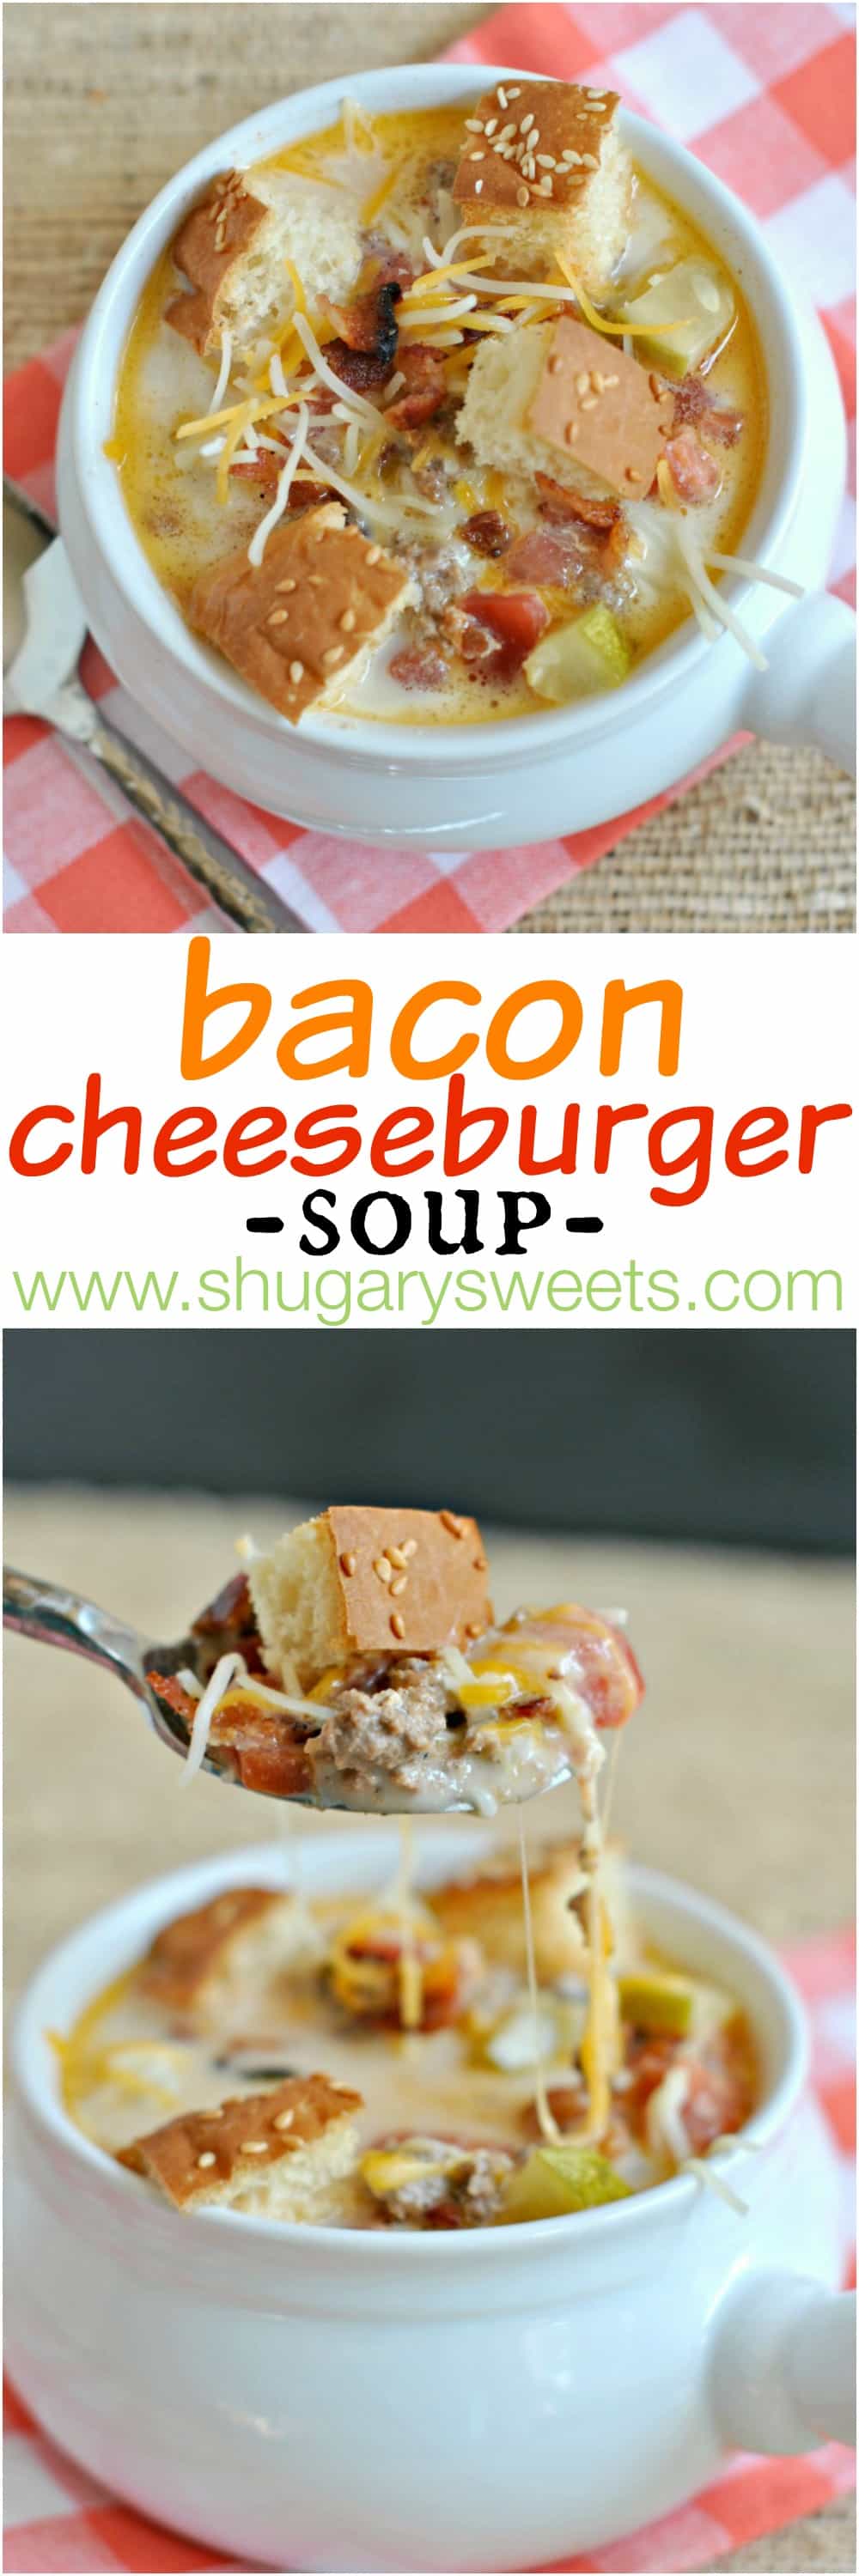 Bacon Cheeseburger Soup - Shugary Sweets